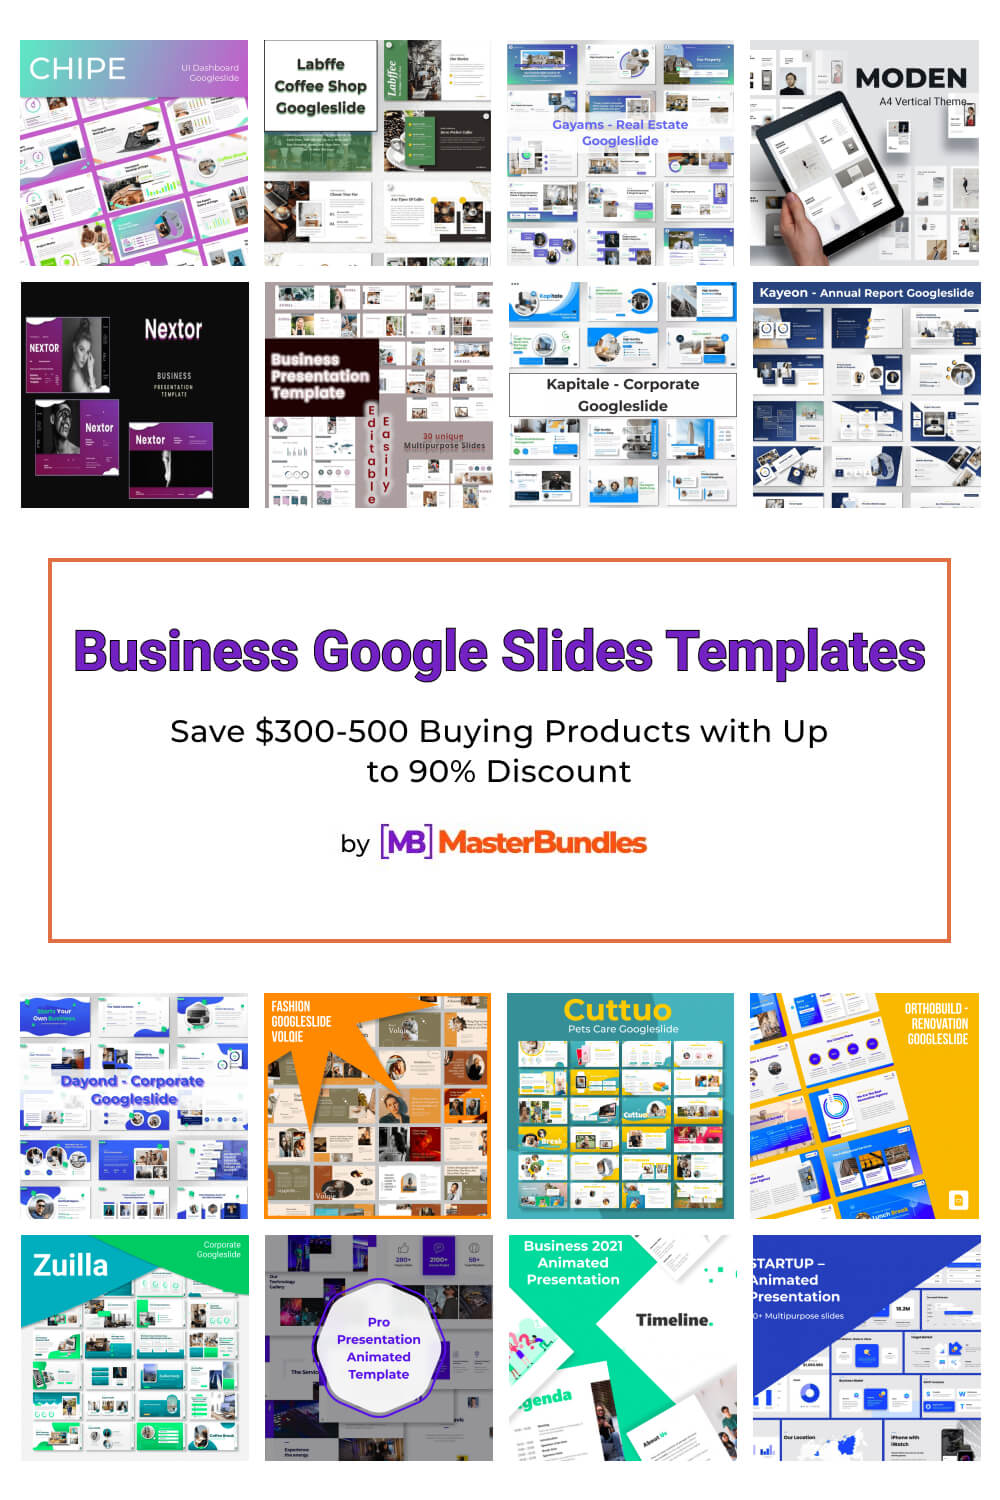 business google slides templates pinterest image.